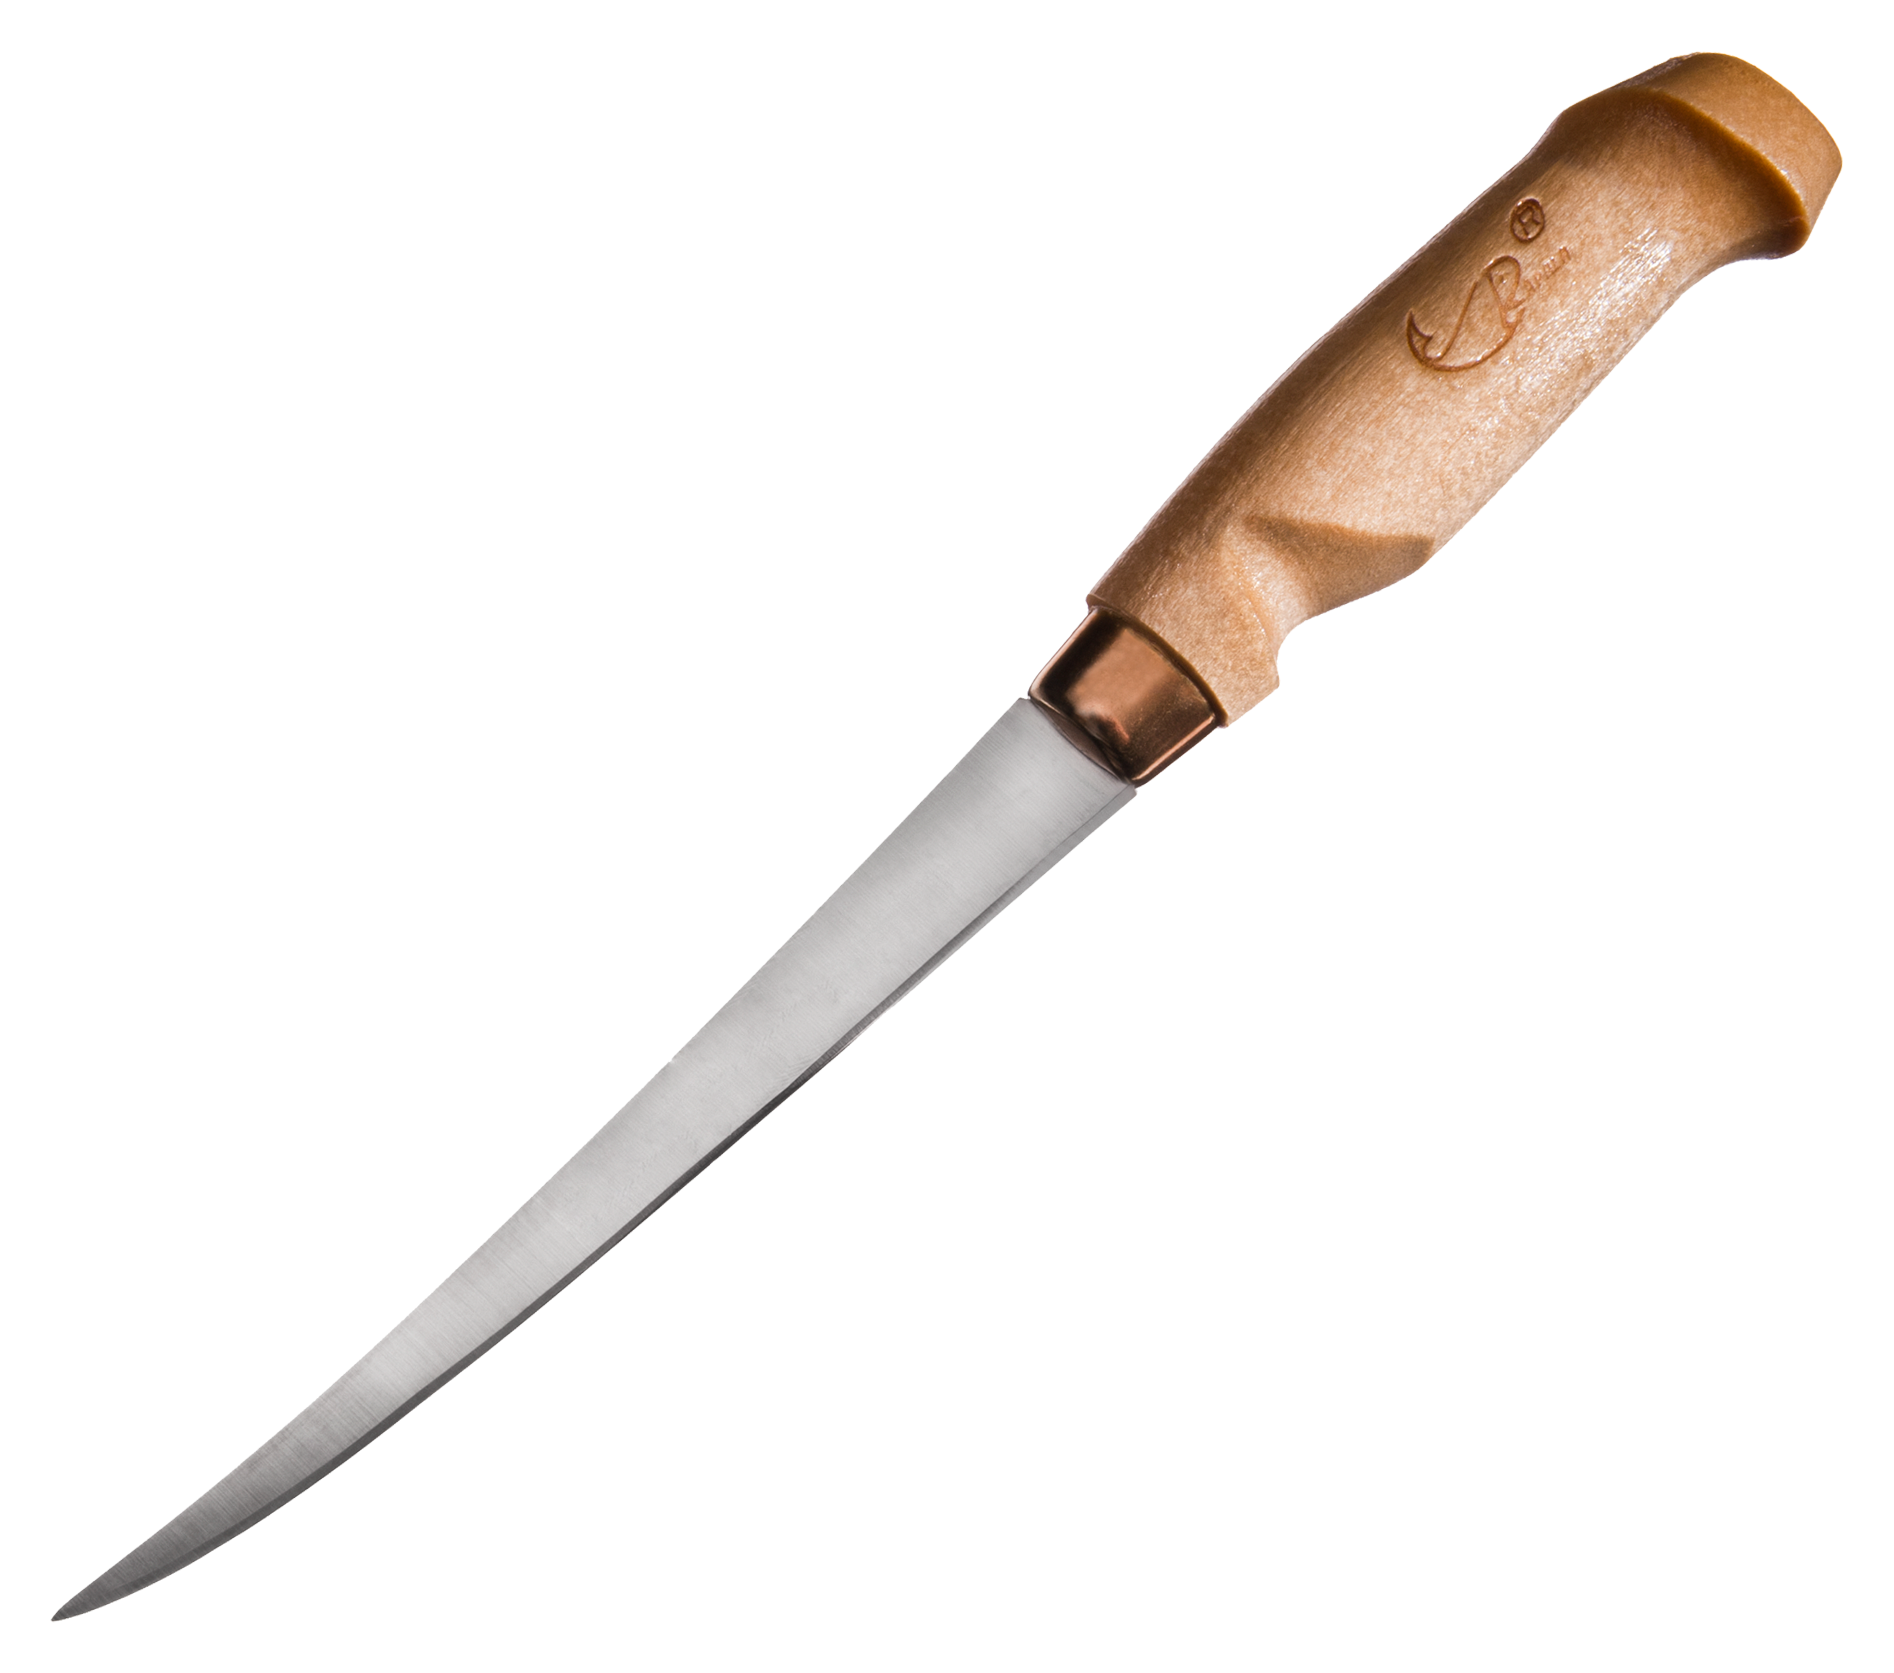  Rapala Hook Sharpener : Knife Sharpeners : Sports